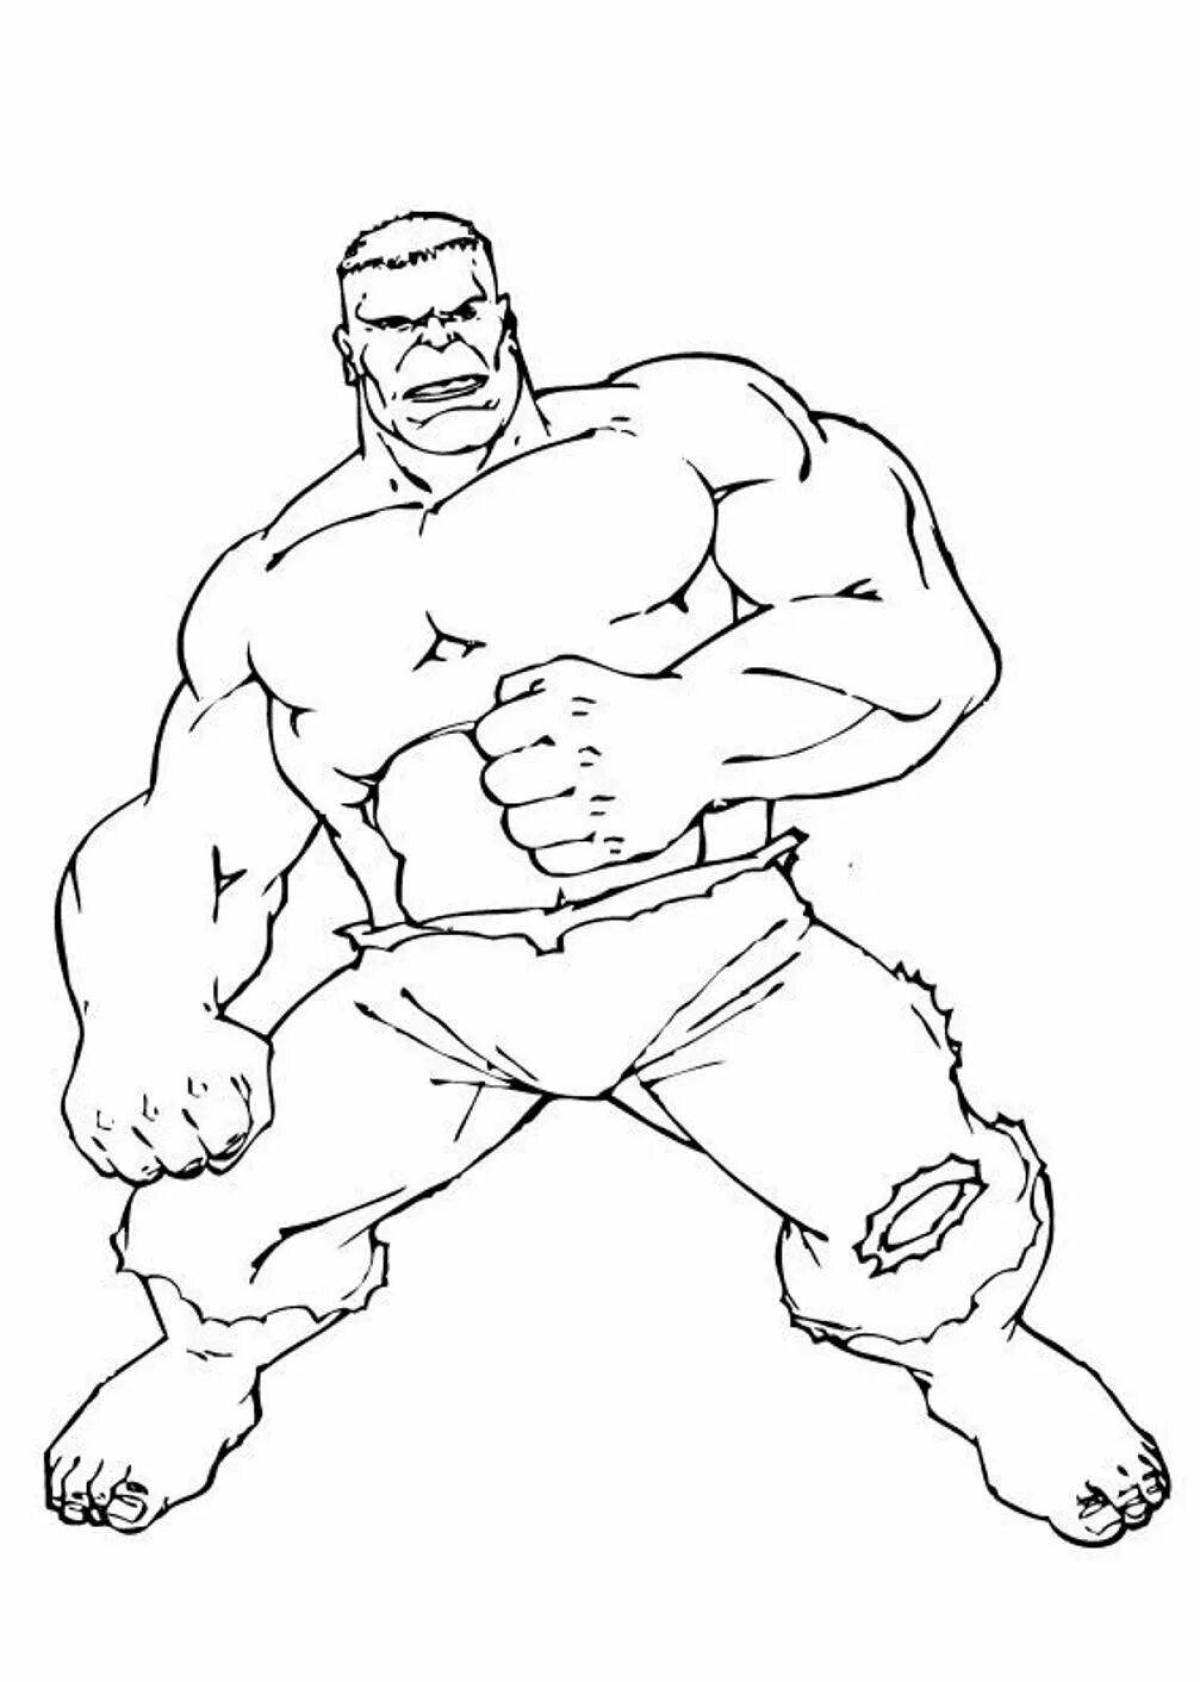 Hulk reference coloring